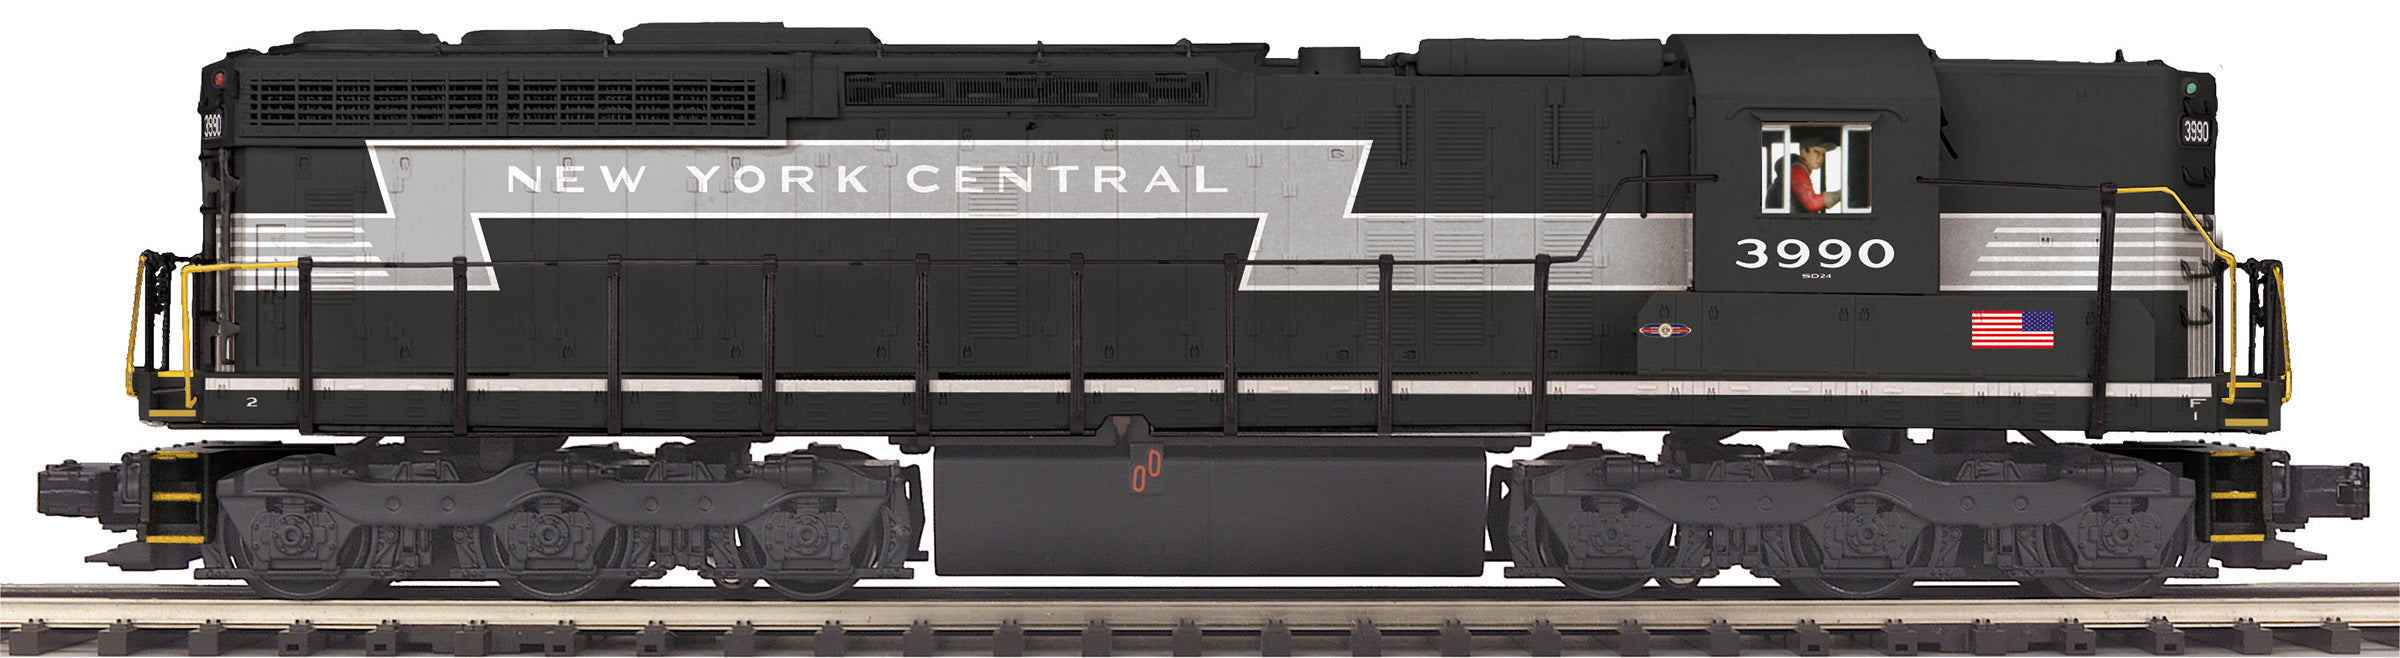 MTH 20-21729-1 - SD24 Diesel Engine "New York Central" #3990 w/ PS3 (Lightening Stripe) - Custom Run for METCA